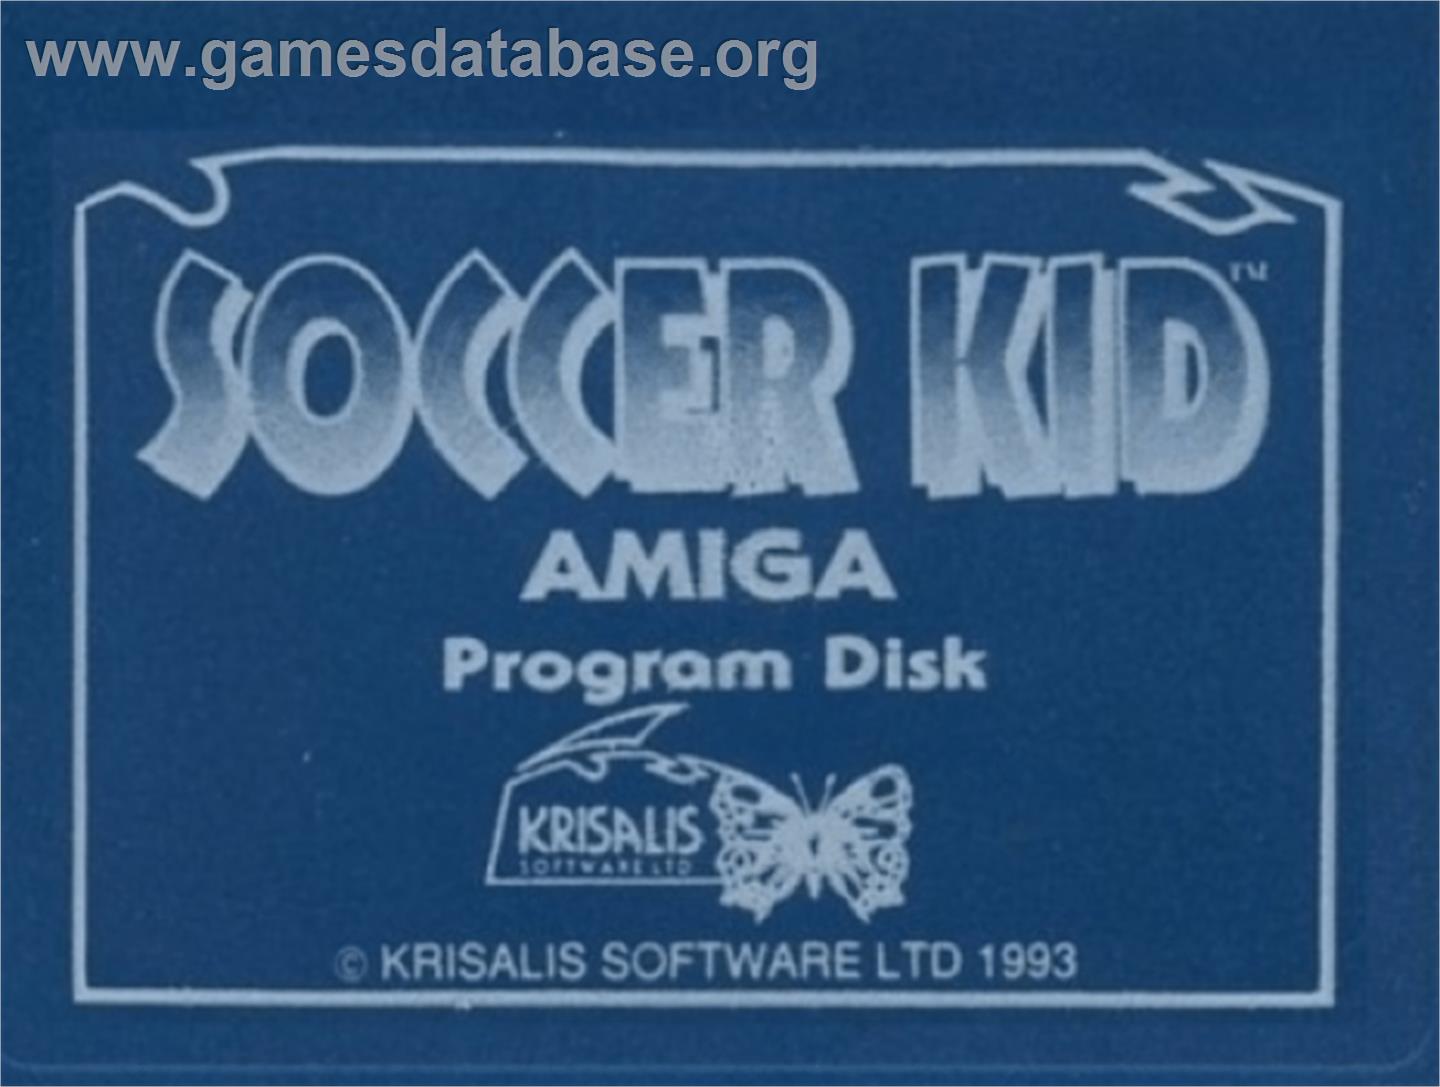 Soccer Kid - Commodore Amiga - Artwork - Cartridge Top